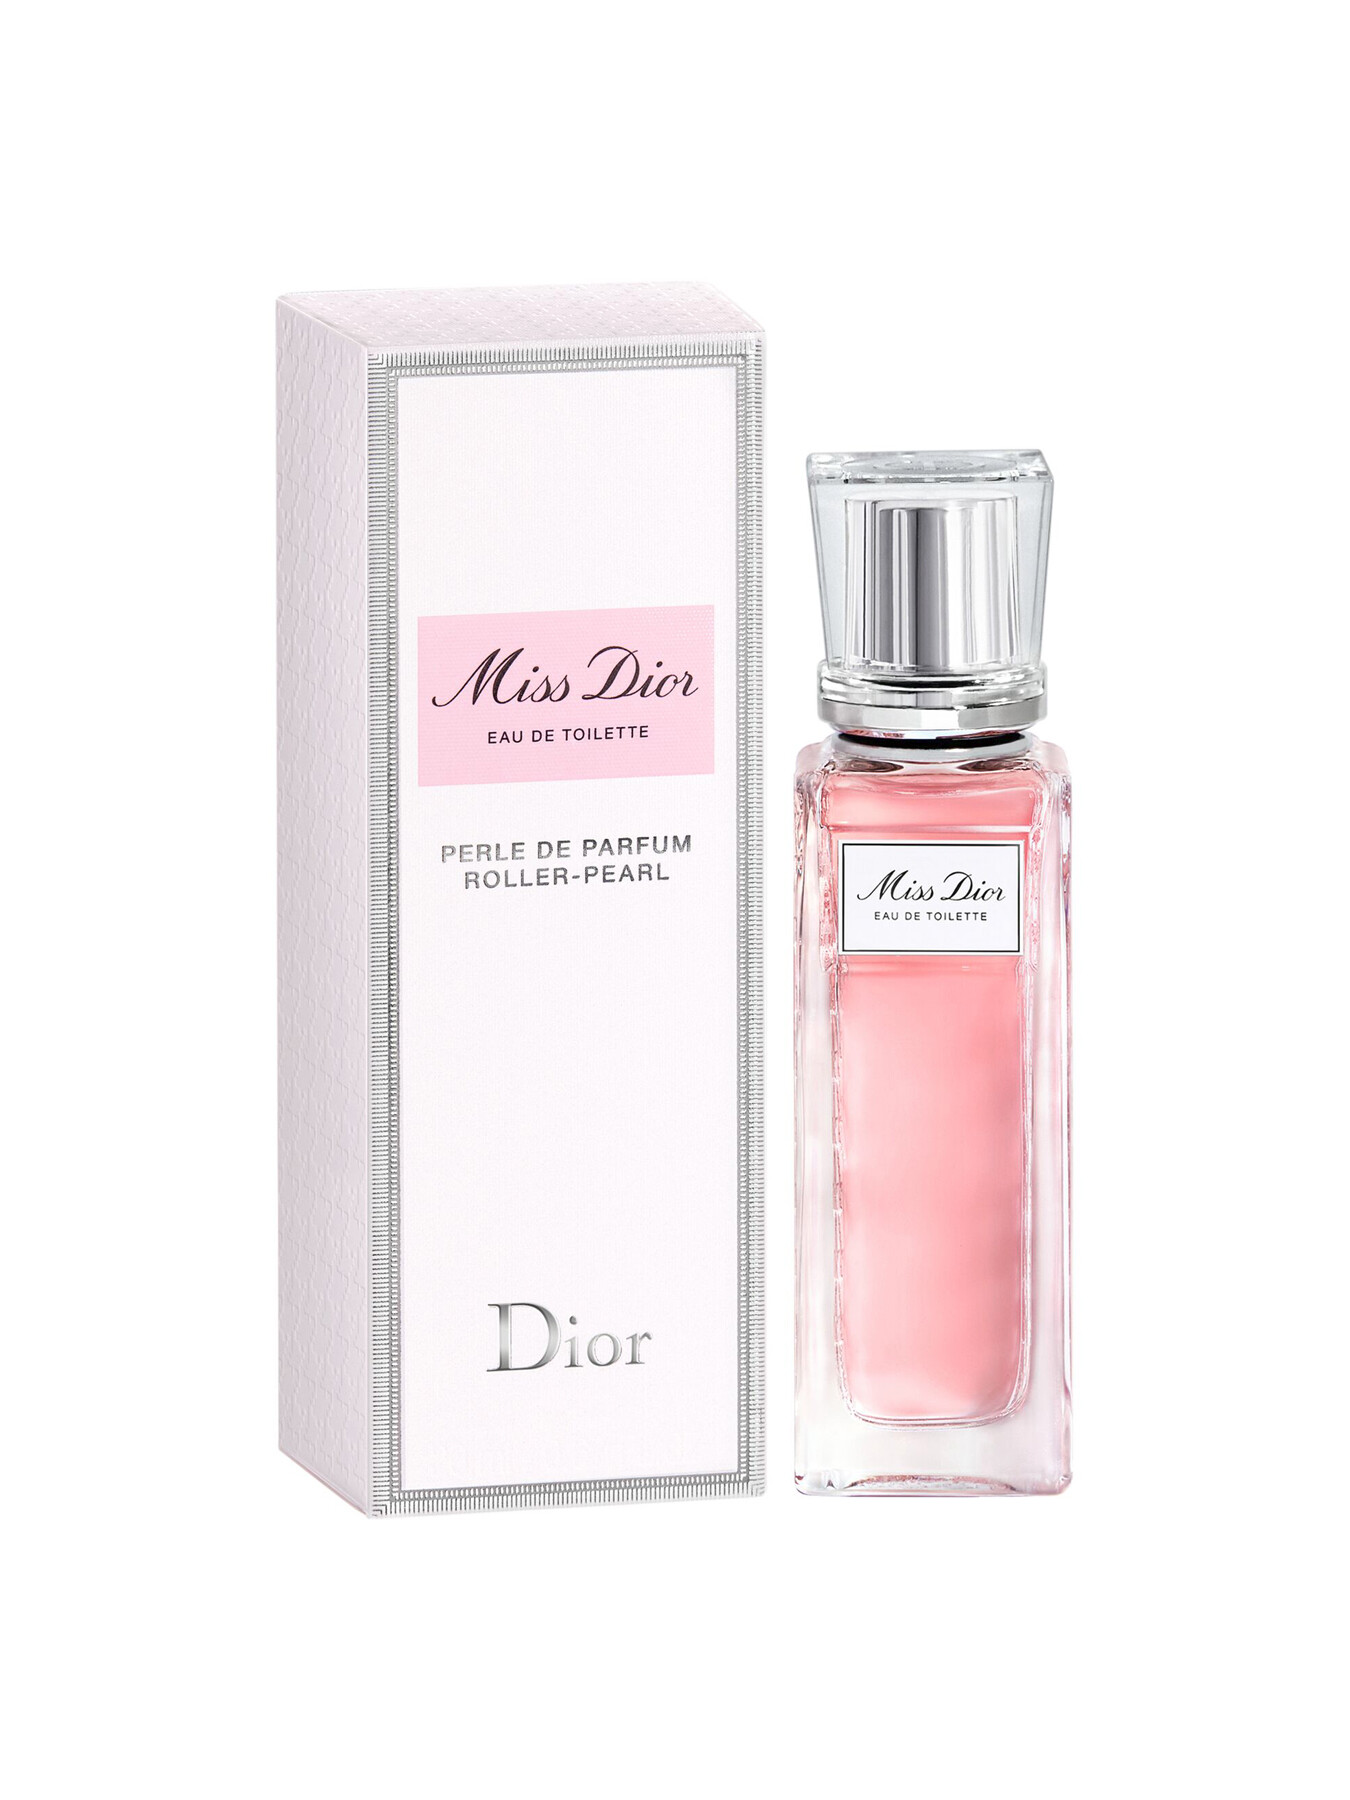 Miss Dior Eau de Toilette Roller-pearl - Dior